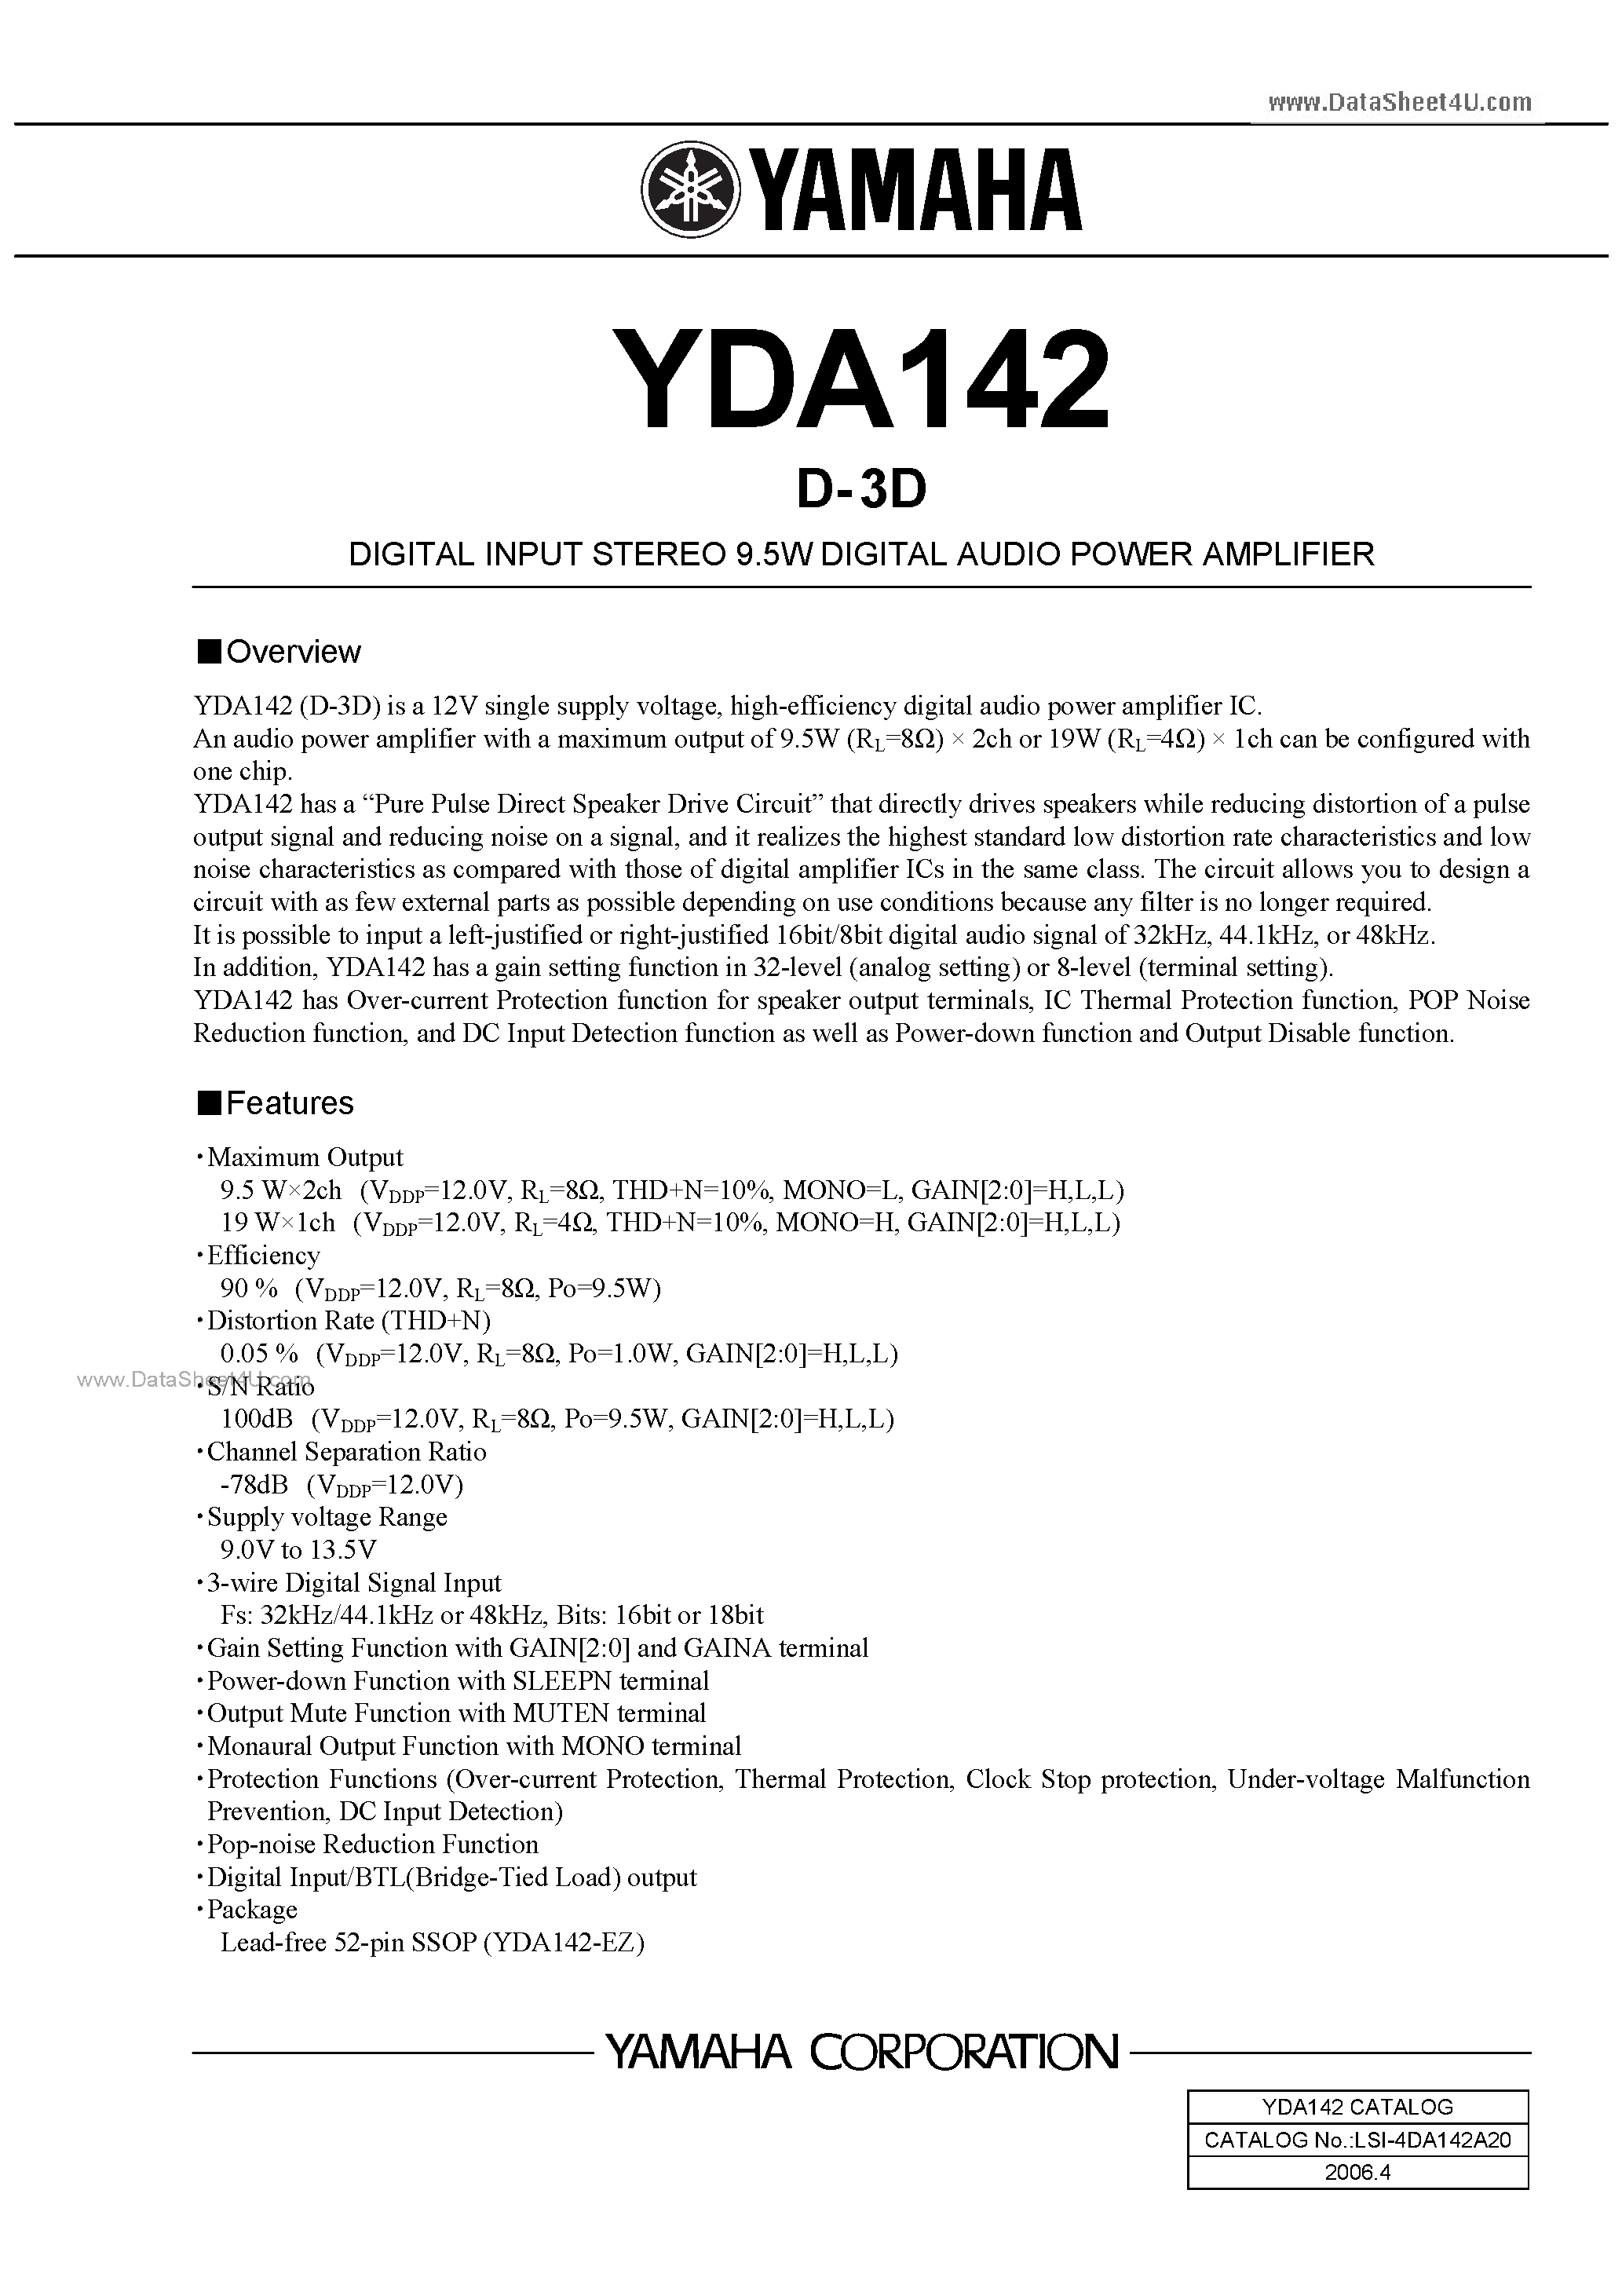 Datasheet YDA142 - DIGITAL INPUT STEREO 9.5W DIGITAL AUDIO POWER AMPLIFIER page 1